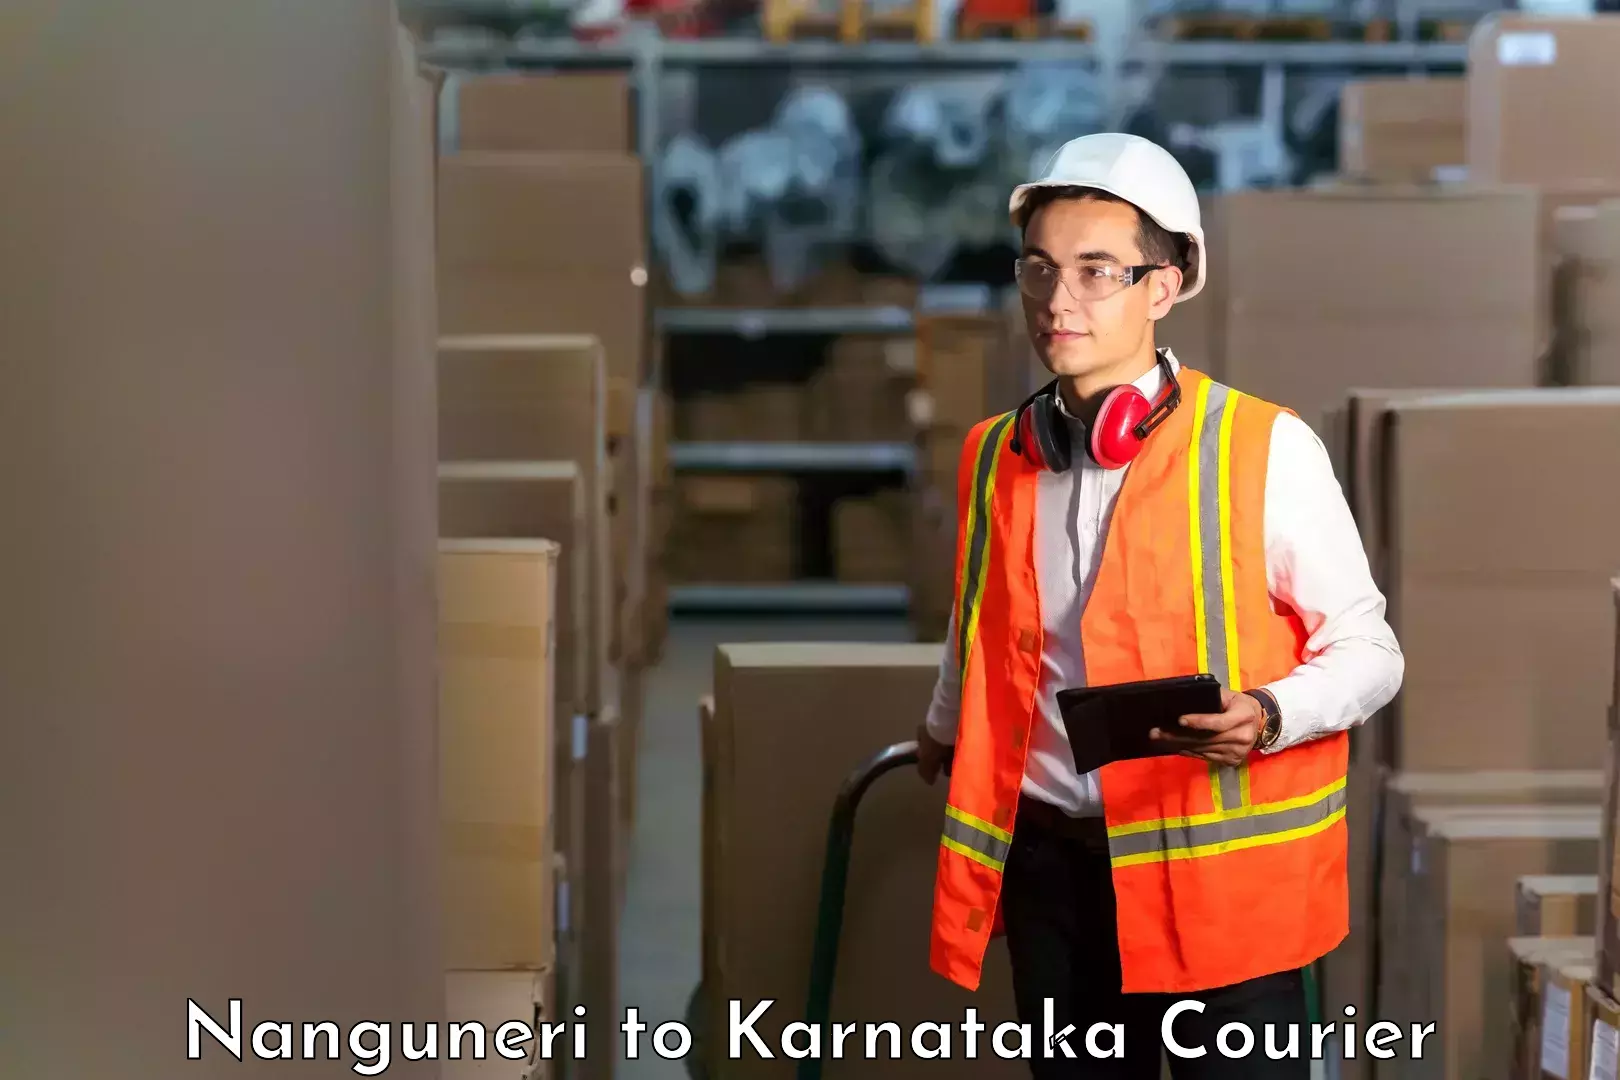 Cargo delivery service Nanguneri to Karnataka